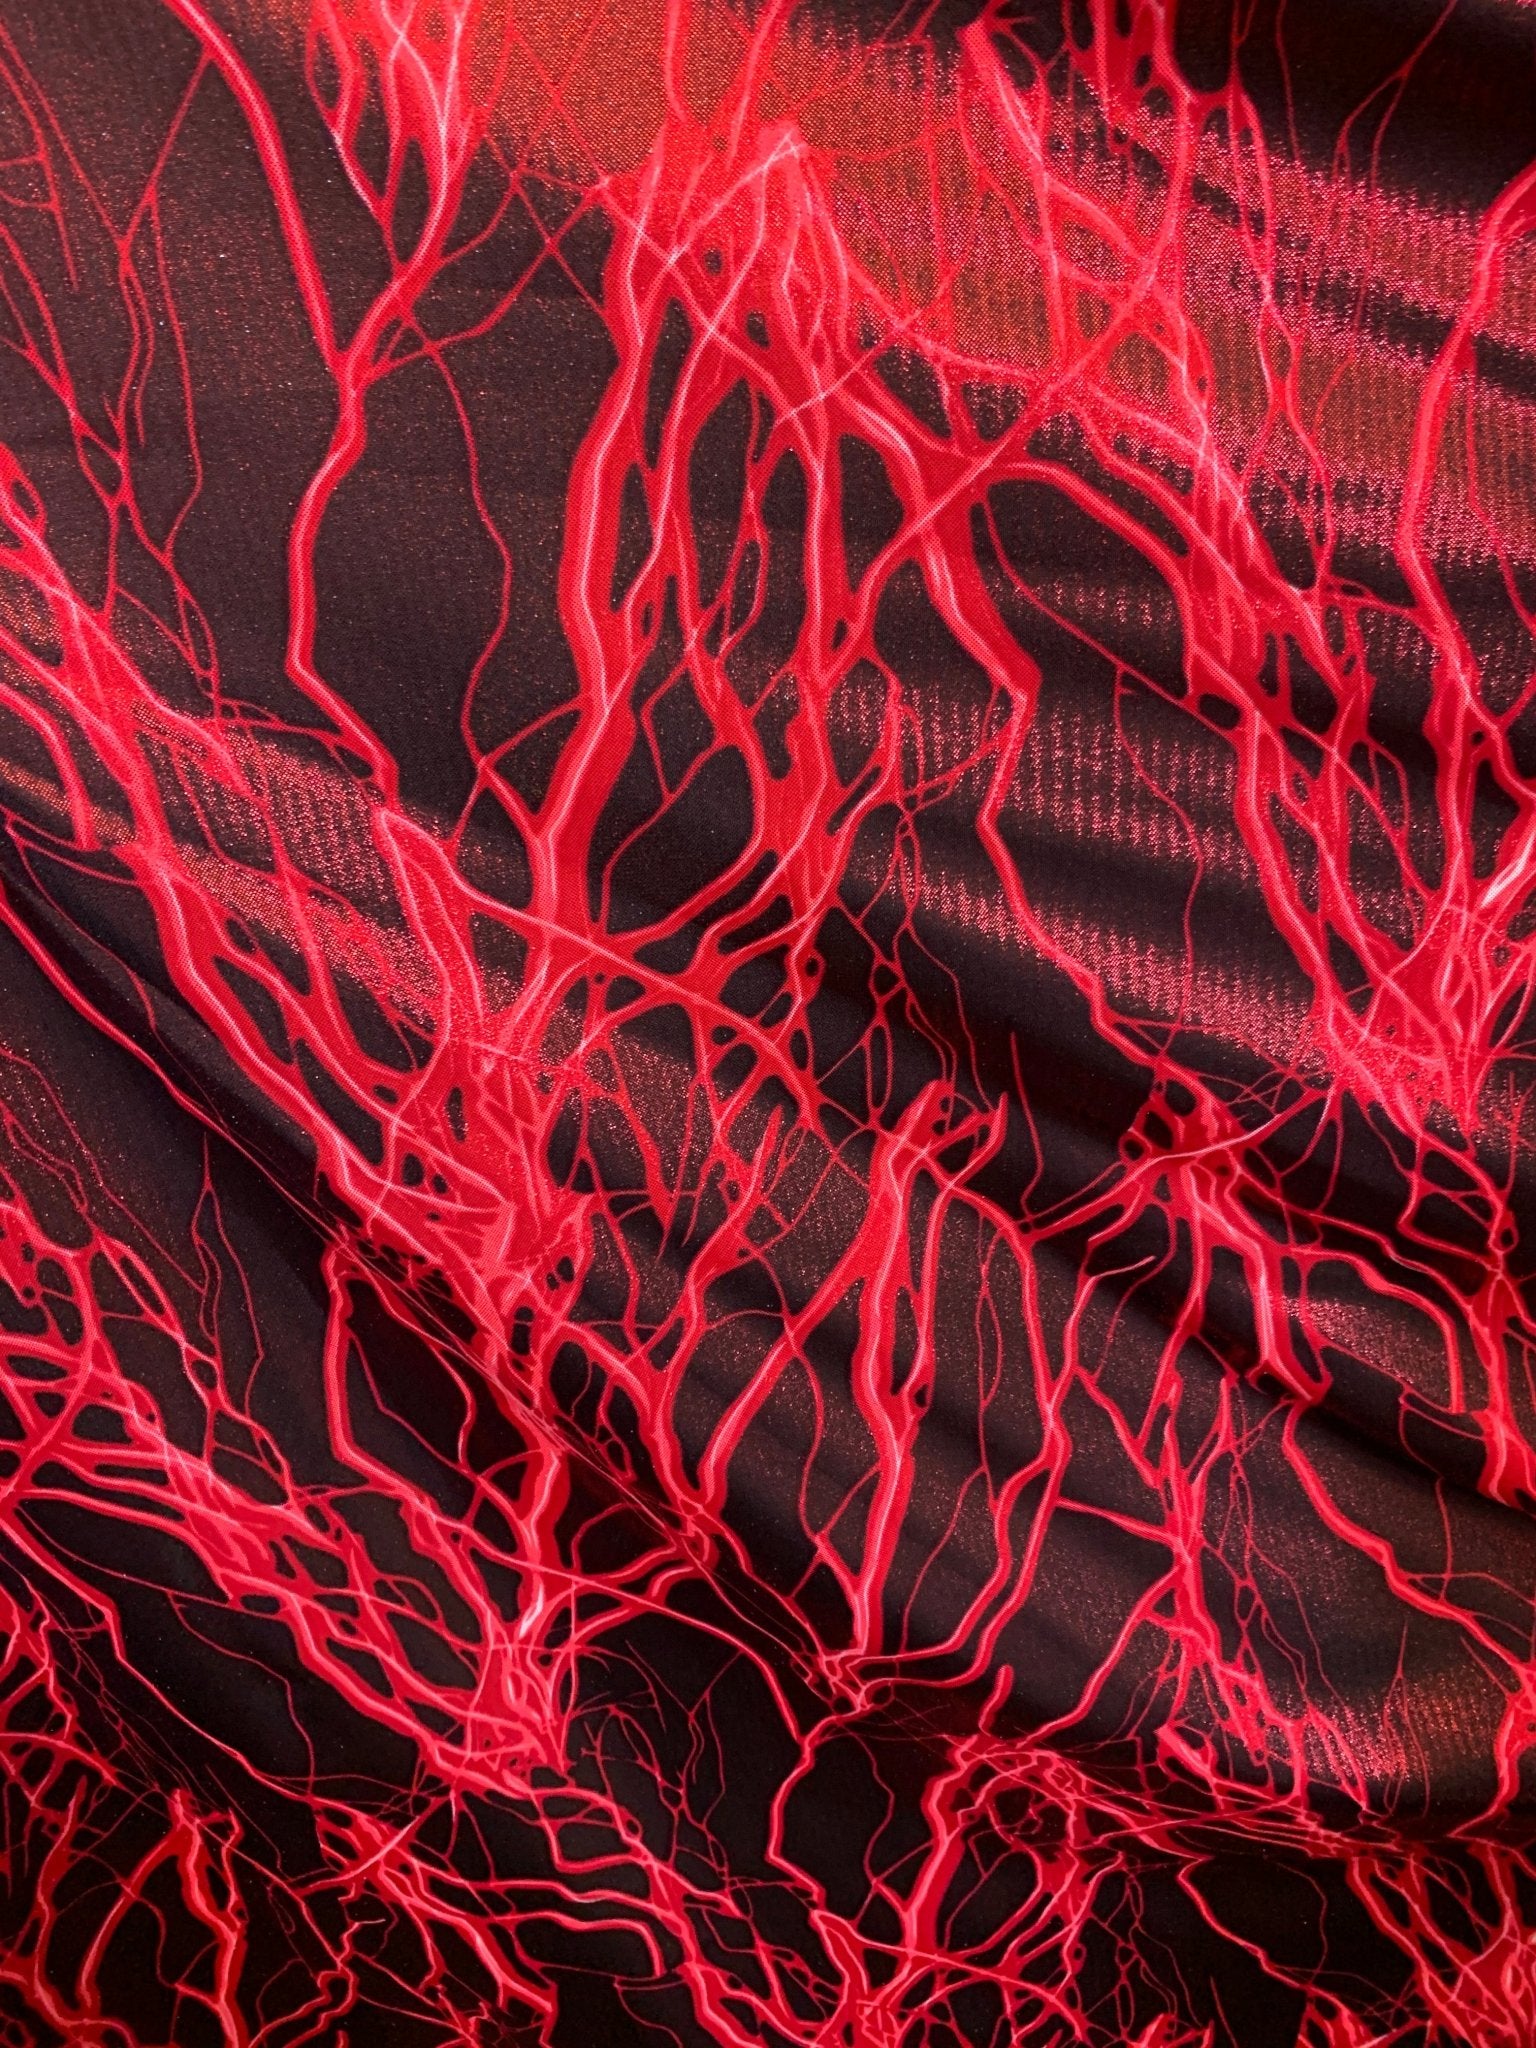 Lighting Bolt Red/Black Nylon Spandex Fabric By The YardSpandex FabricICEFABRICICE FABRICSLighting Bolt Red/Black Nylon Spandex Fabric By The Yard ICEFABRIC